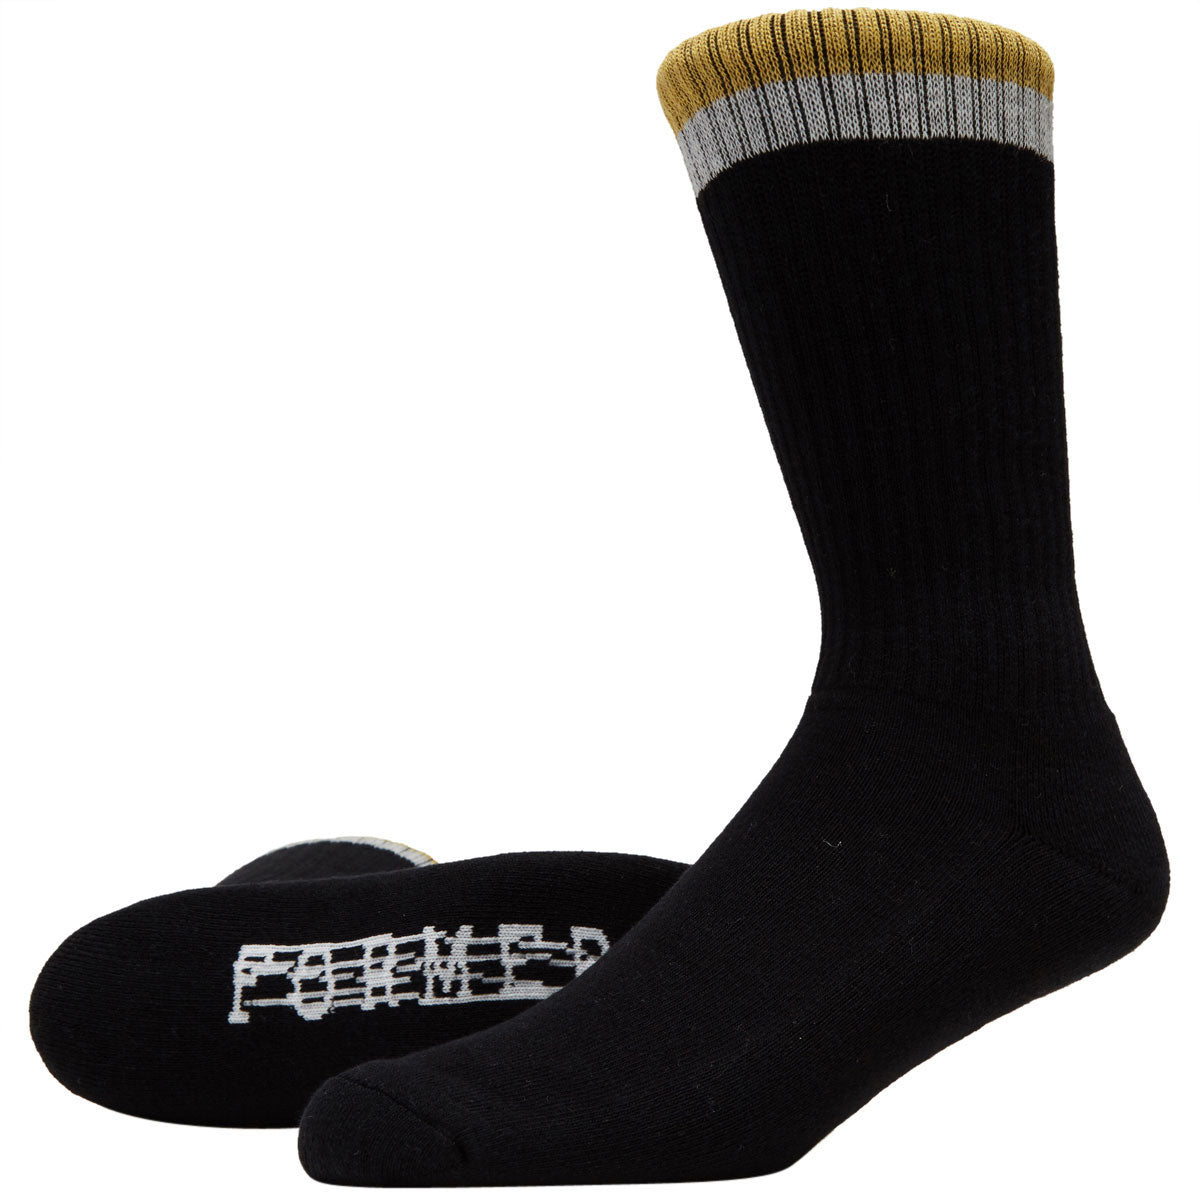 Former Shifting Socks - Black image 2